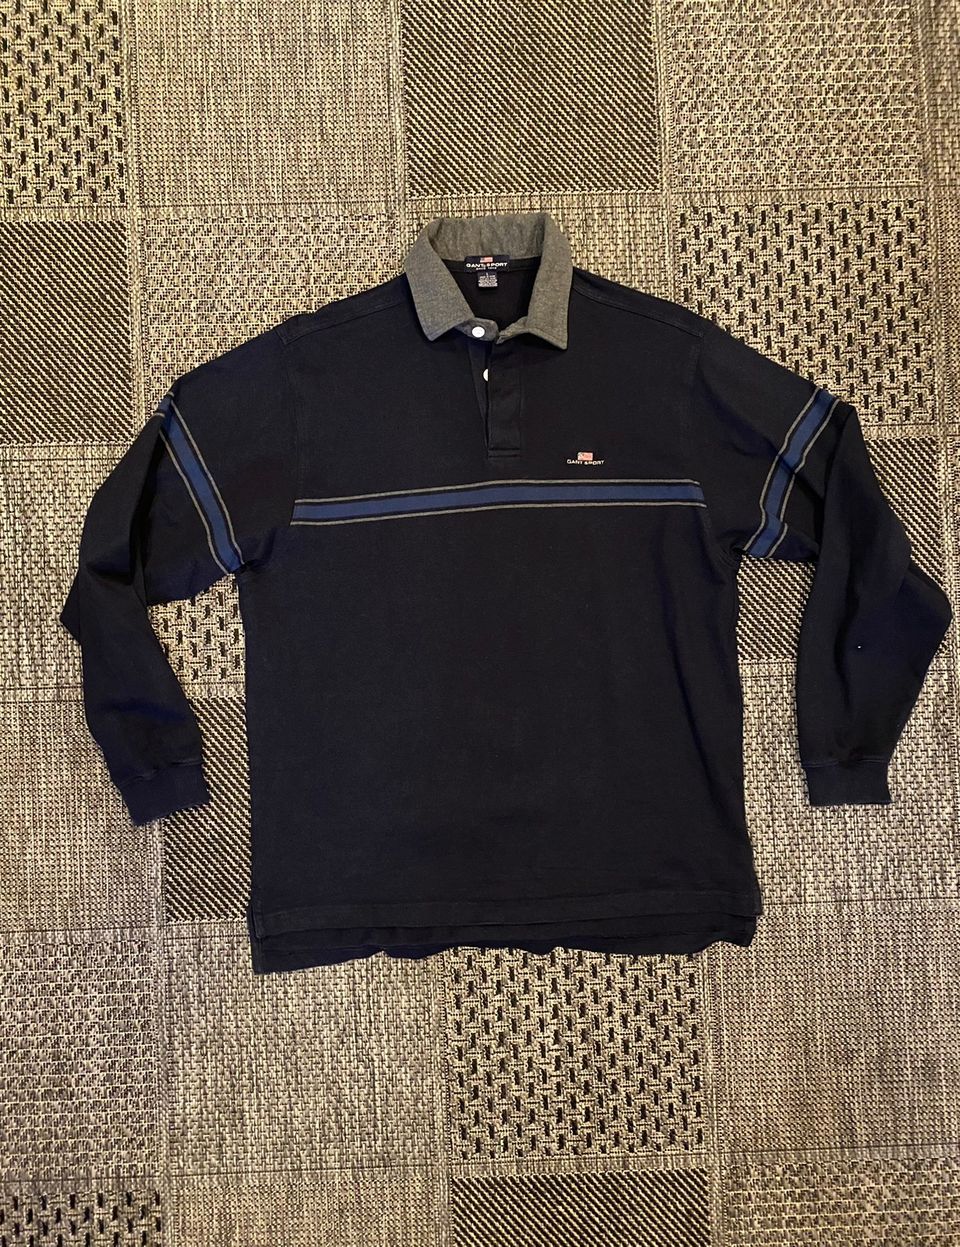 GANT SPORT mens L rugby shirt fit is modern regular 100%cotton sweatshirt fabric